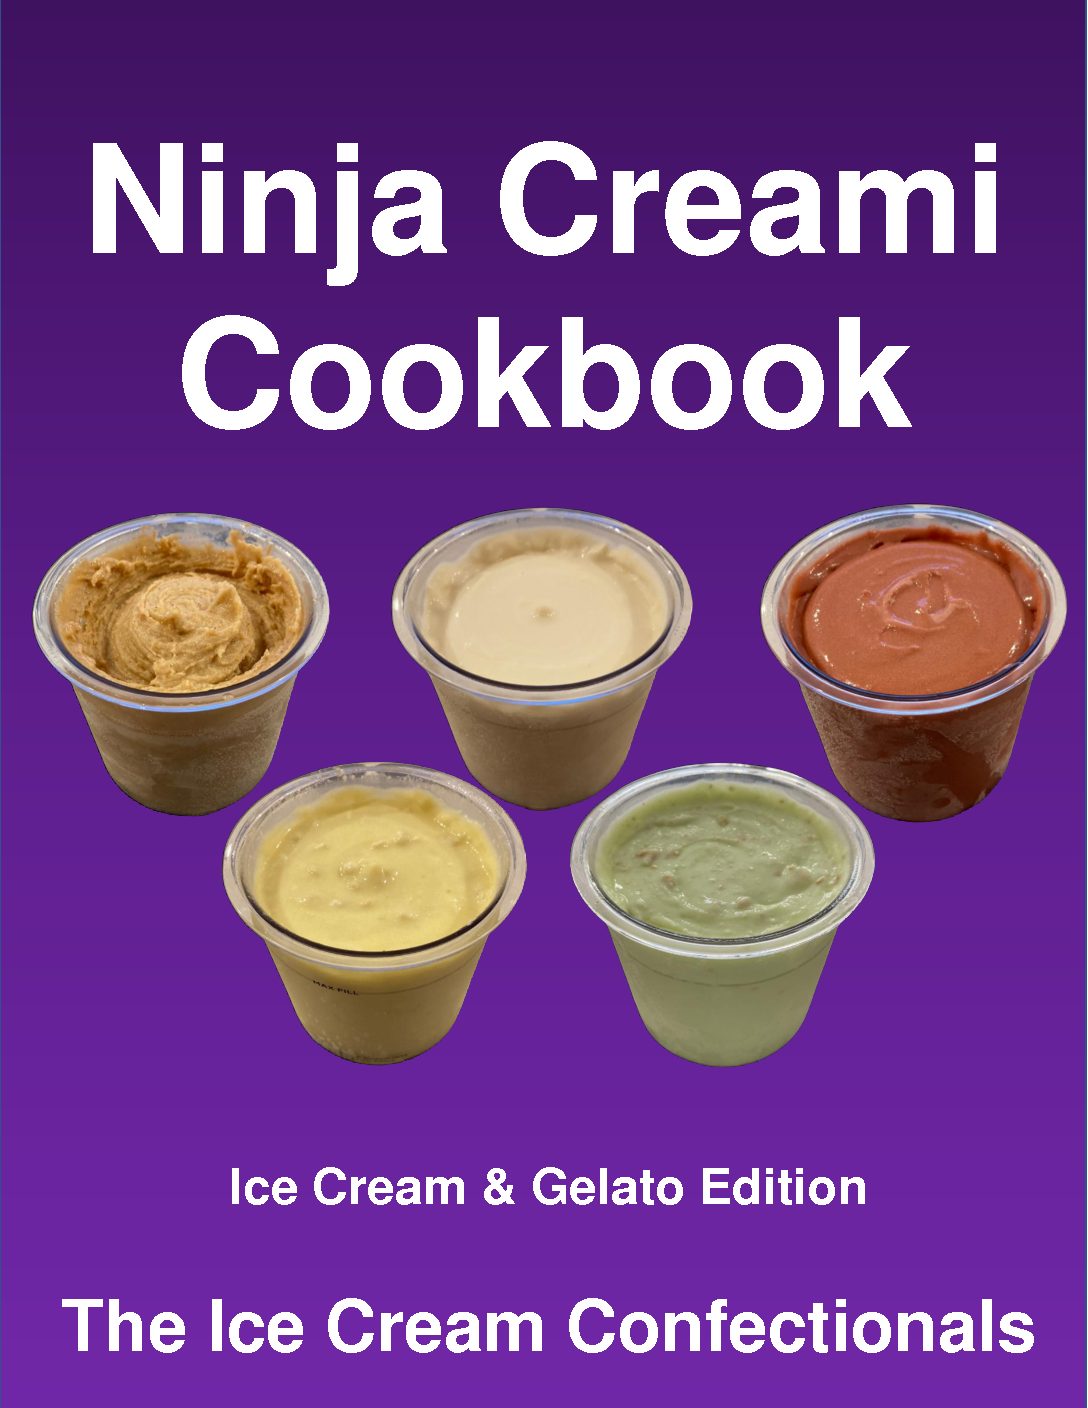 https://theicecreamconfectionals.com/wp-content/uploads/2022/06/Ninja-Creami-Cookbook-Cover-pdf.jpg